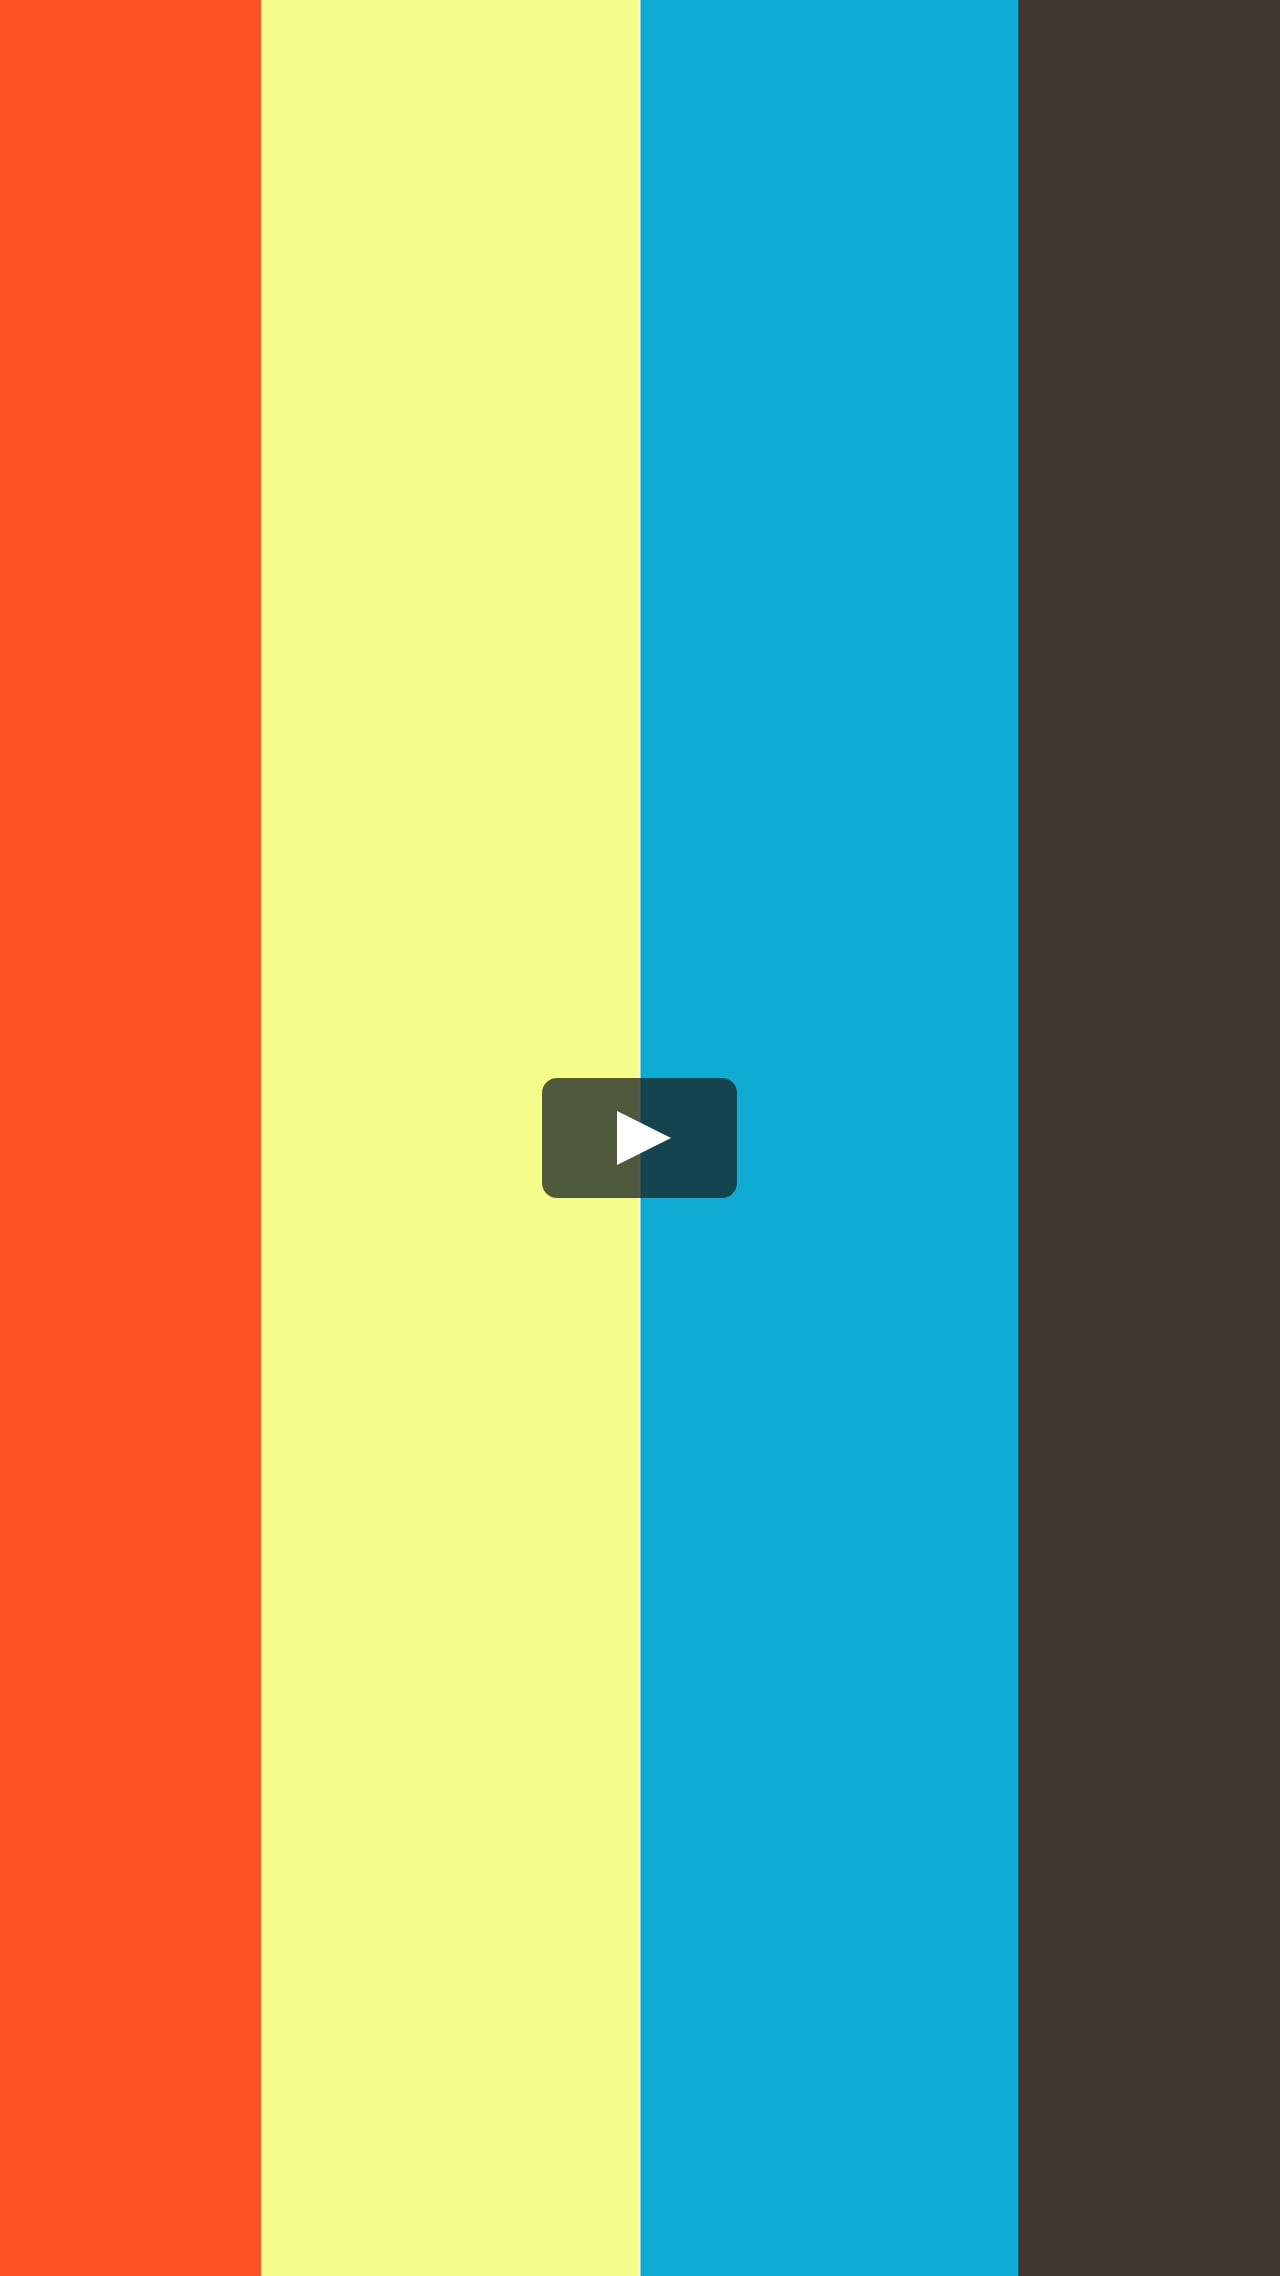 Uktv Dave Big Zuu S Big Eats Social Launch Video 3 9x16 Version On Vimeo